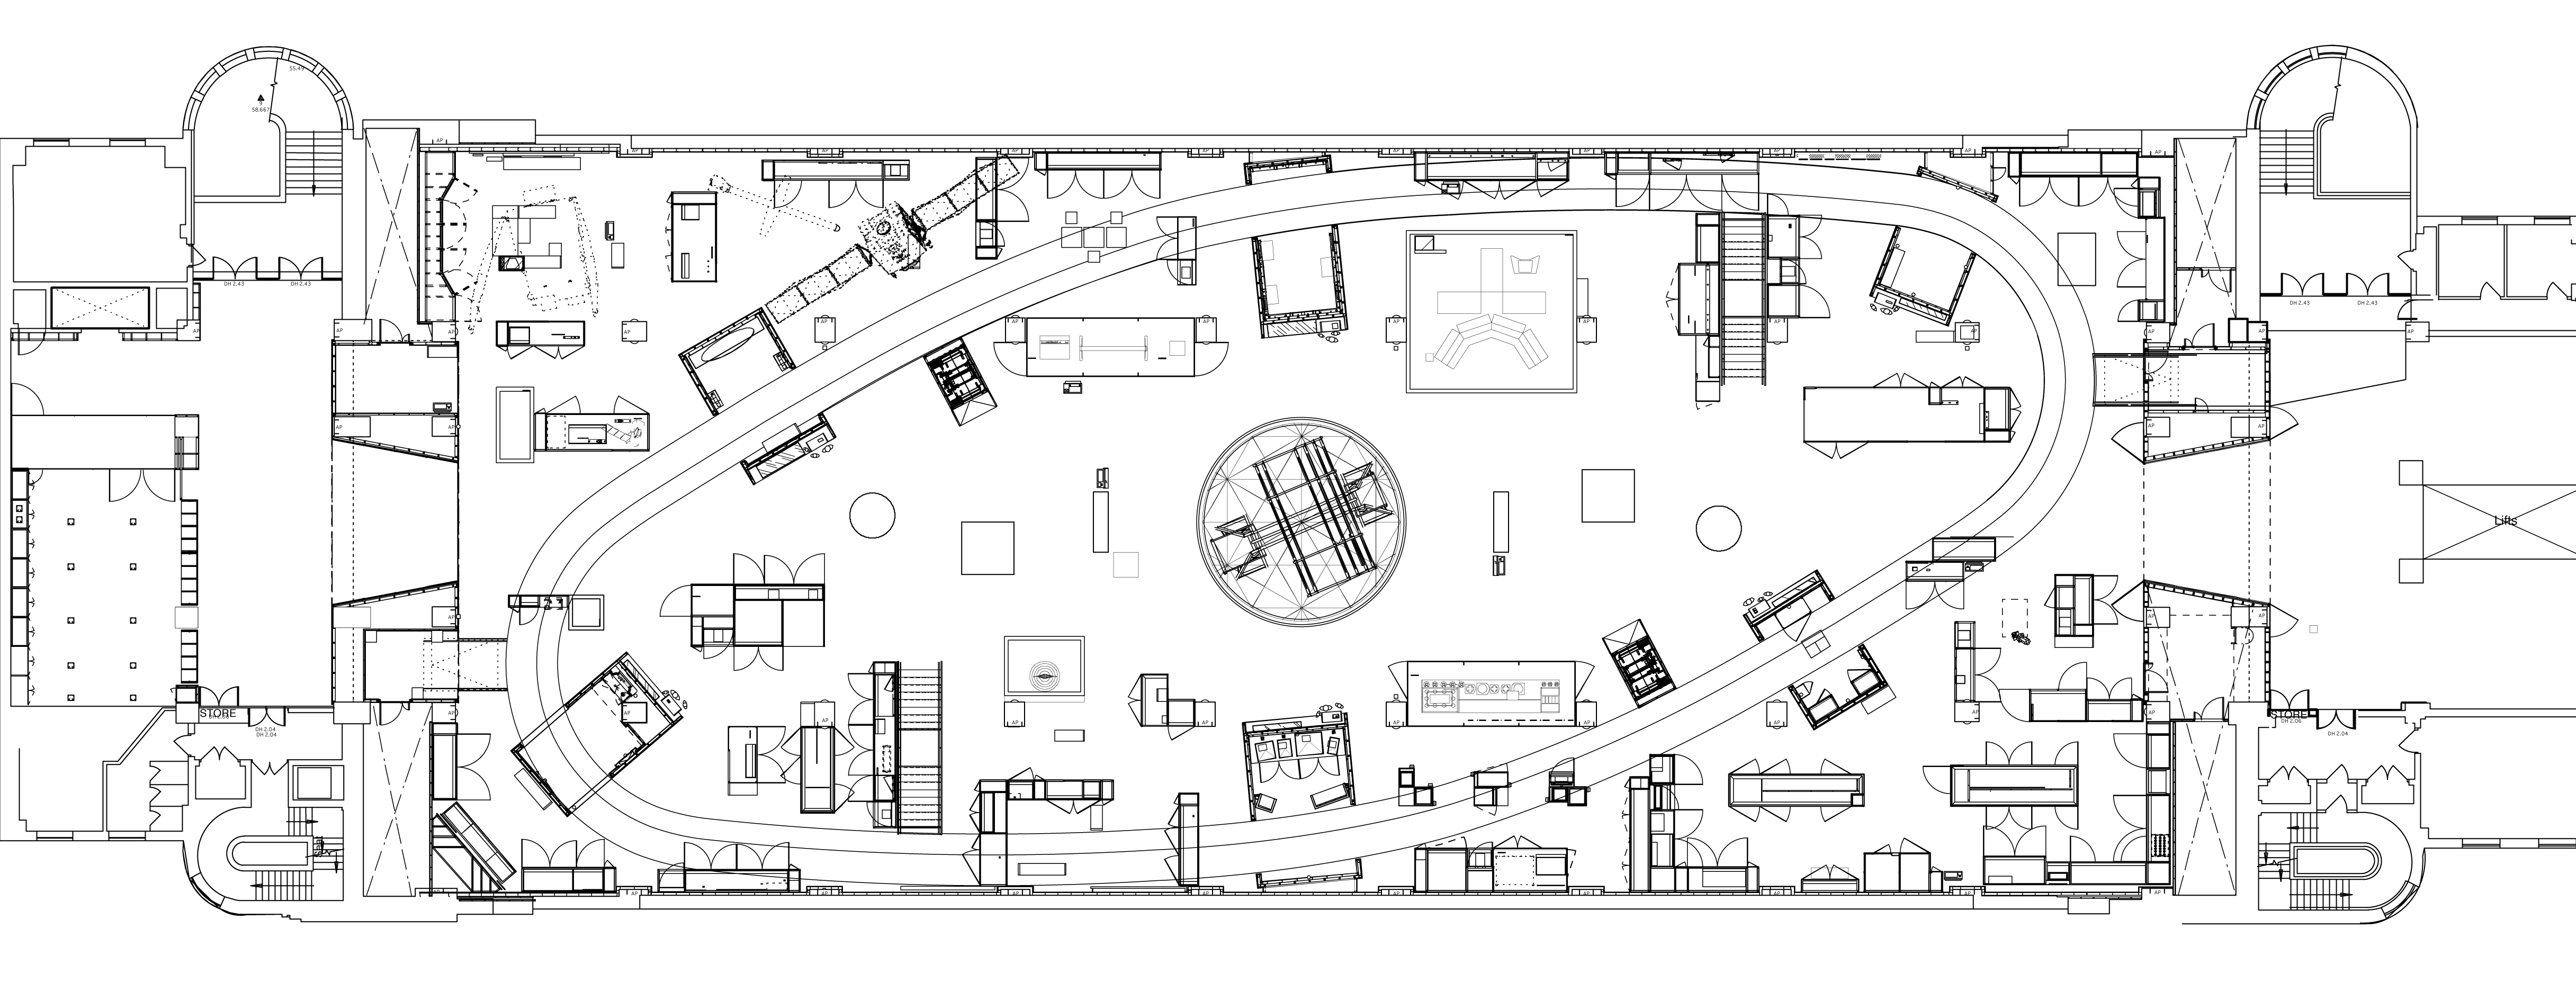 Floorplan of the Information Age gallery. Image credit: Universal Design Studio